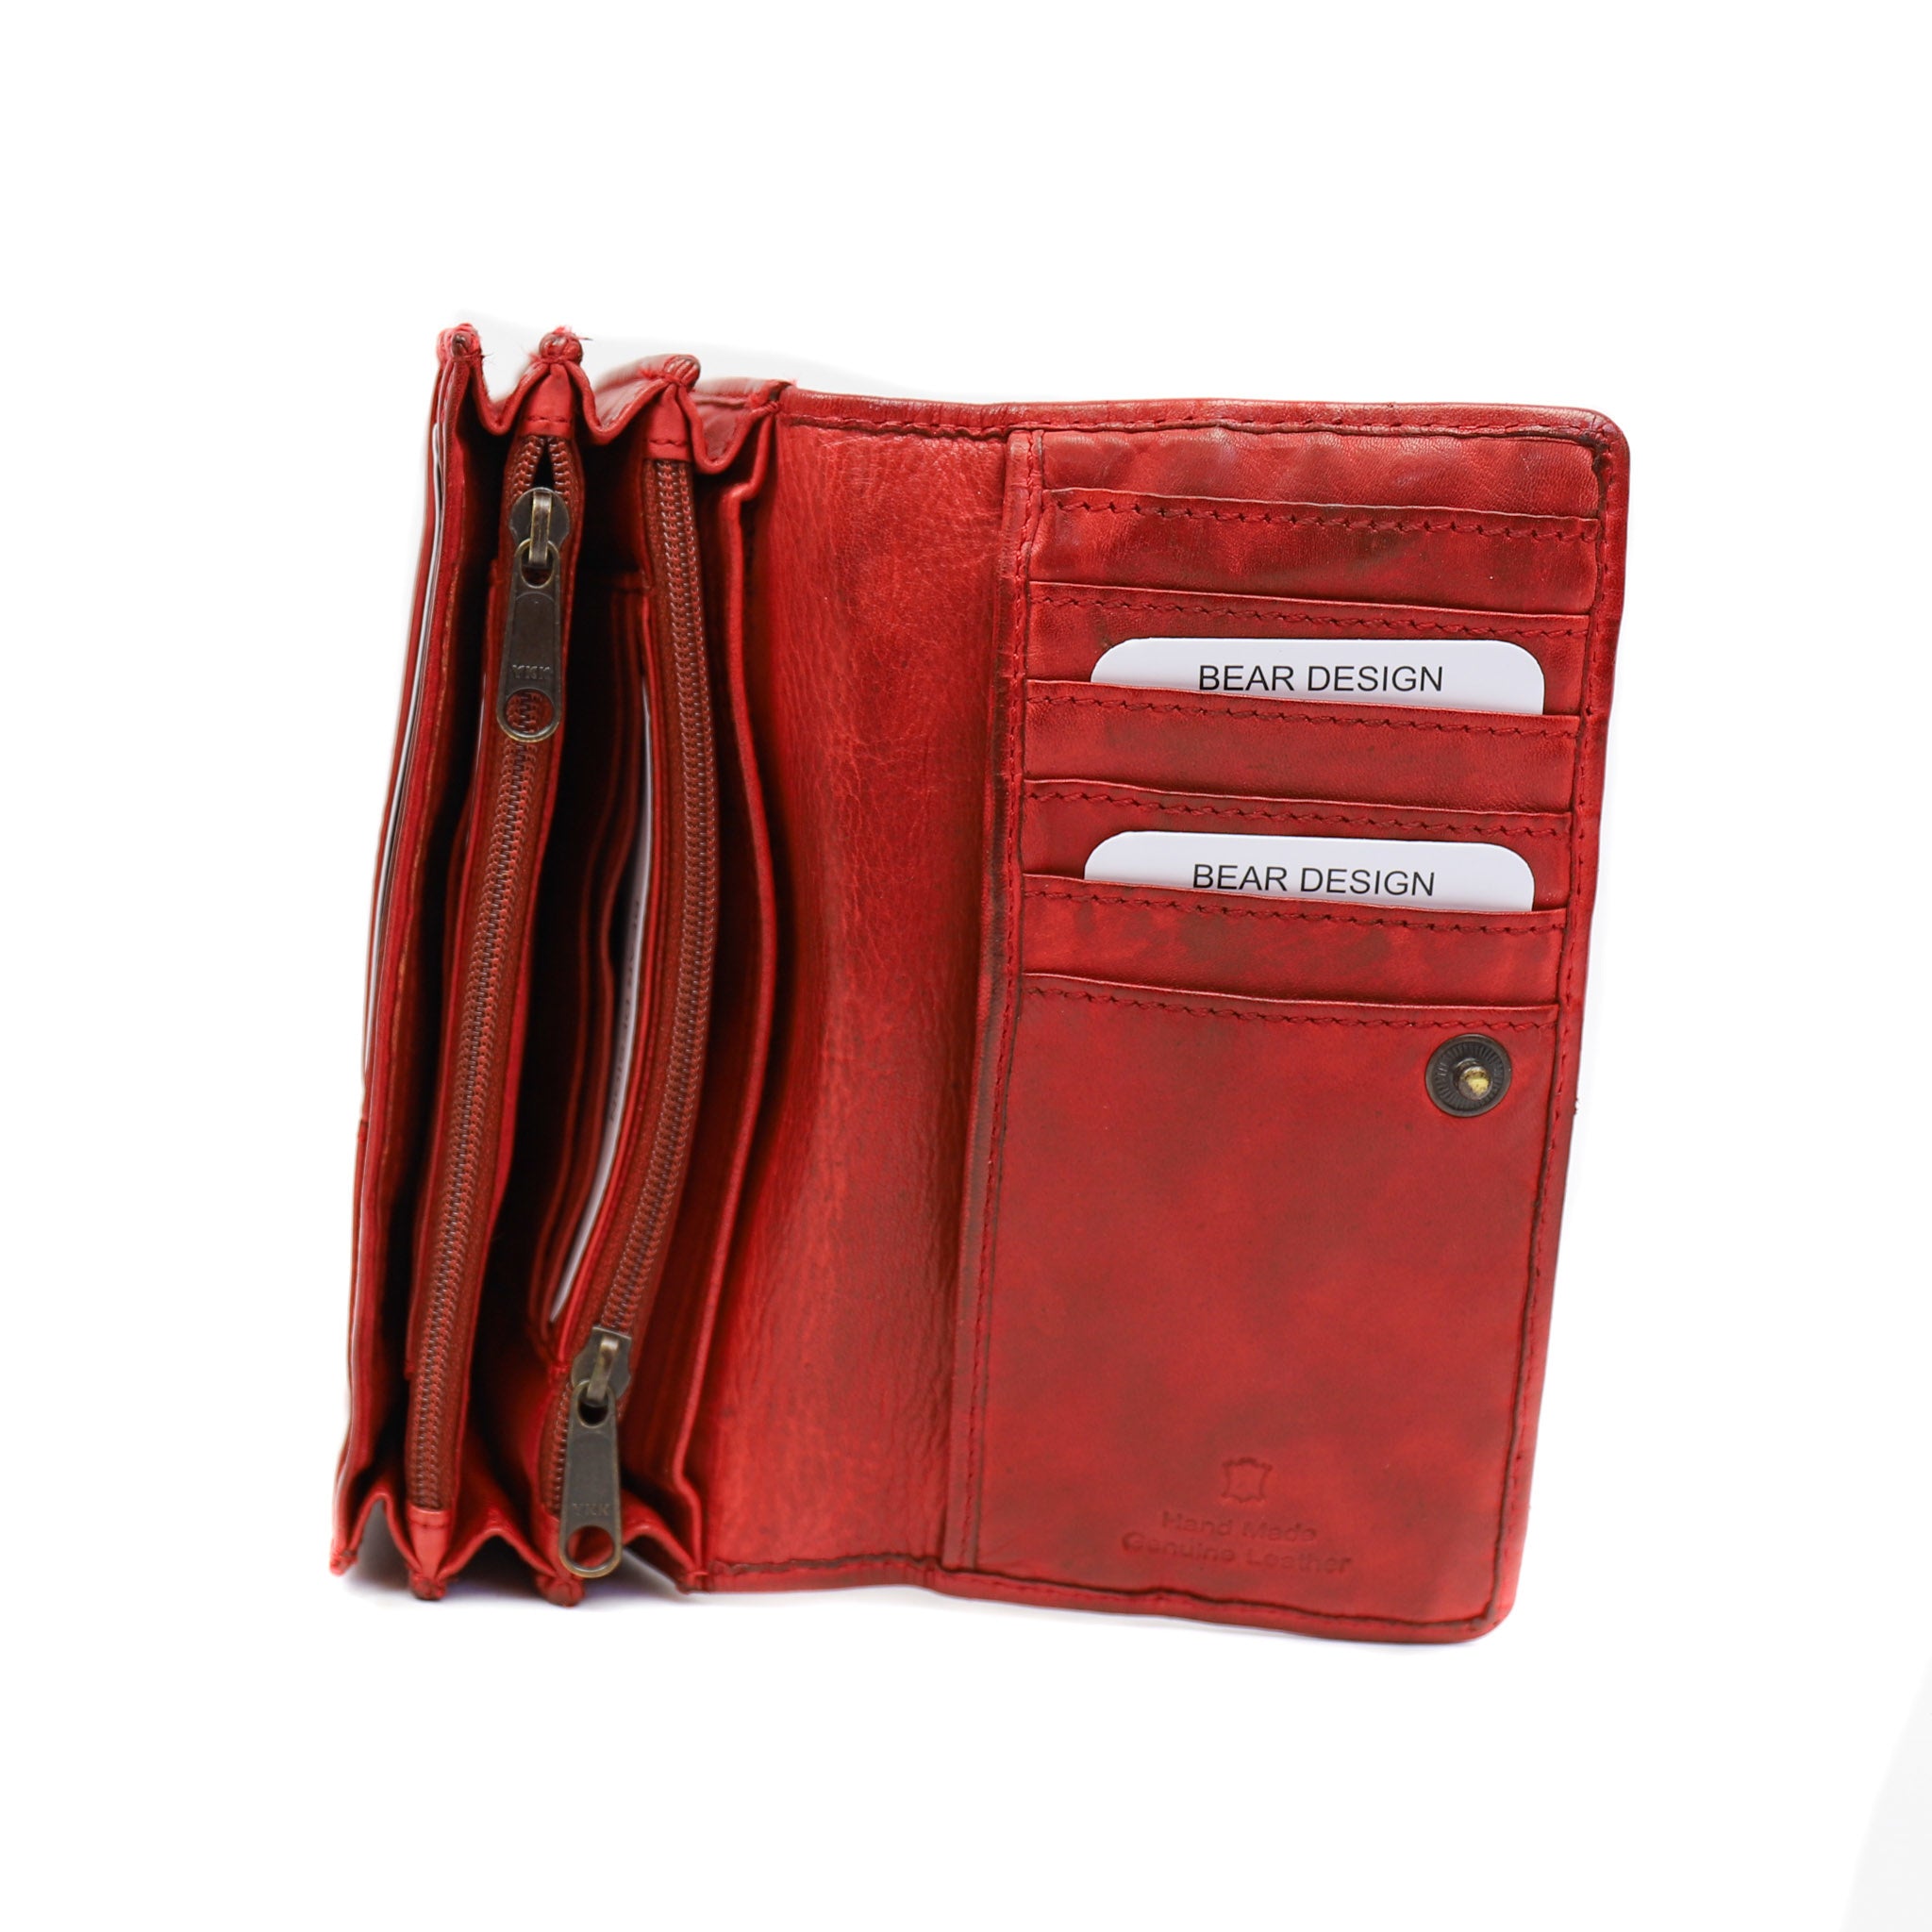 Wrap wallet 'Emma' red - CL 782 RFID